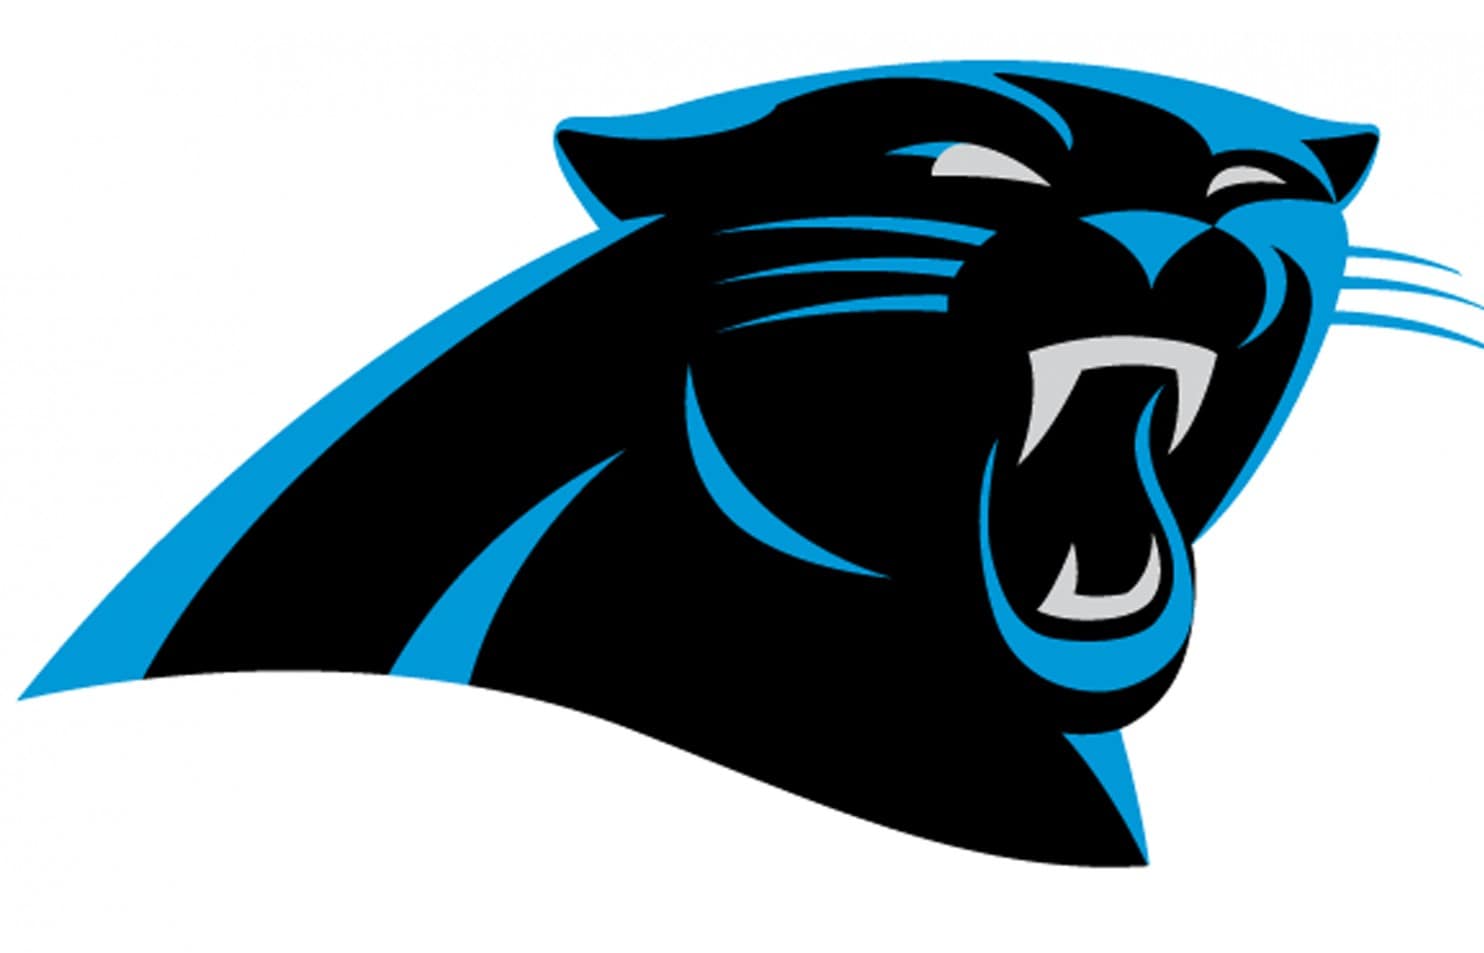 Carolina Panthers New Logo - Carolina Panthers unveil 'more aggressive' logo as Nike takes over ...